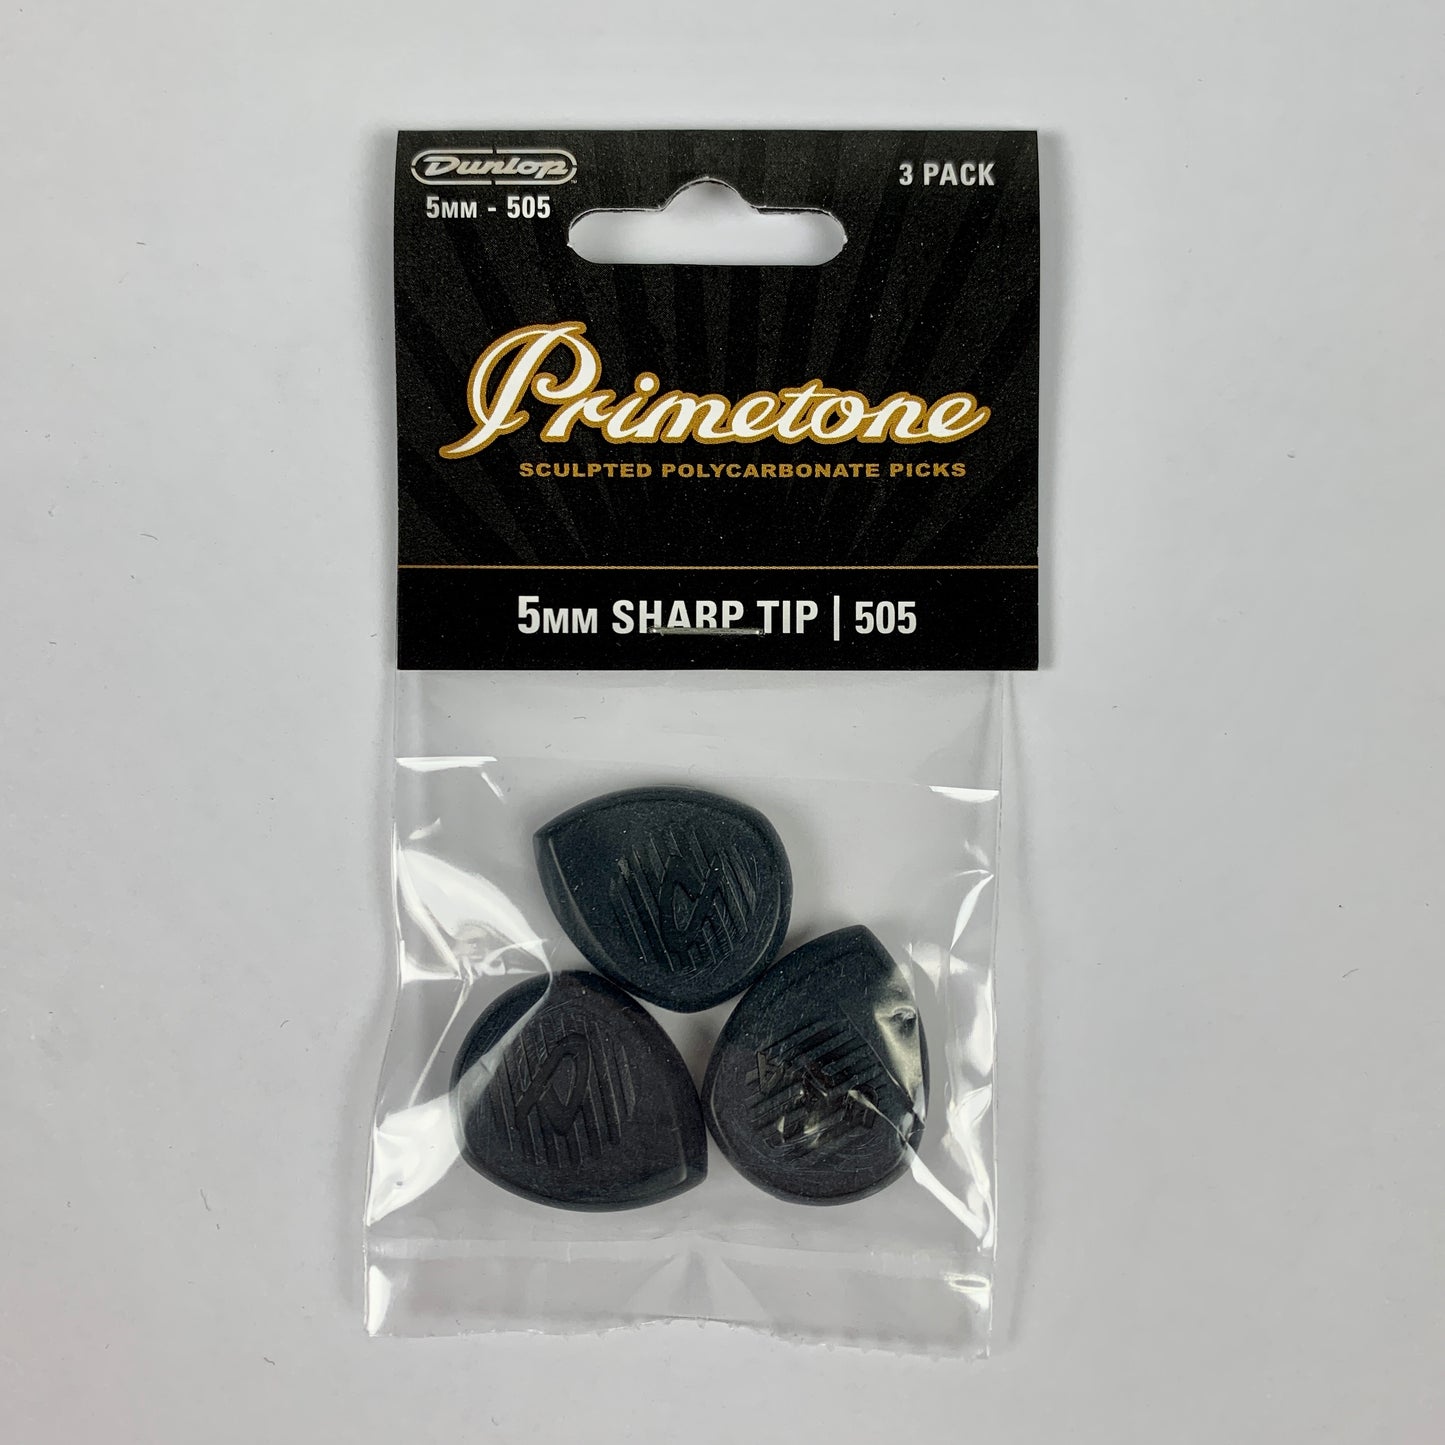 Dunlop 477P505 Primetone Classic Sharp Tip Pick 5.0mm, 3 Pack